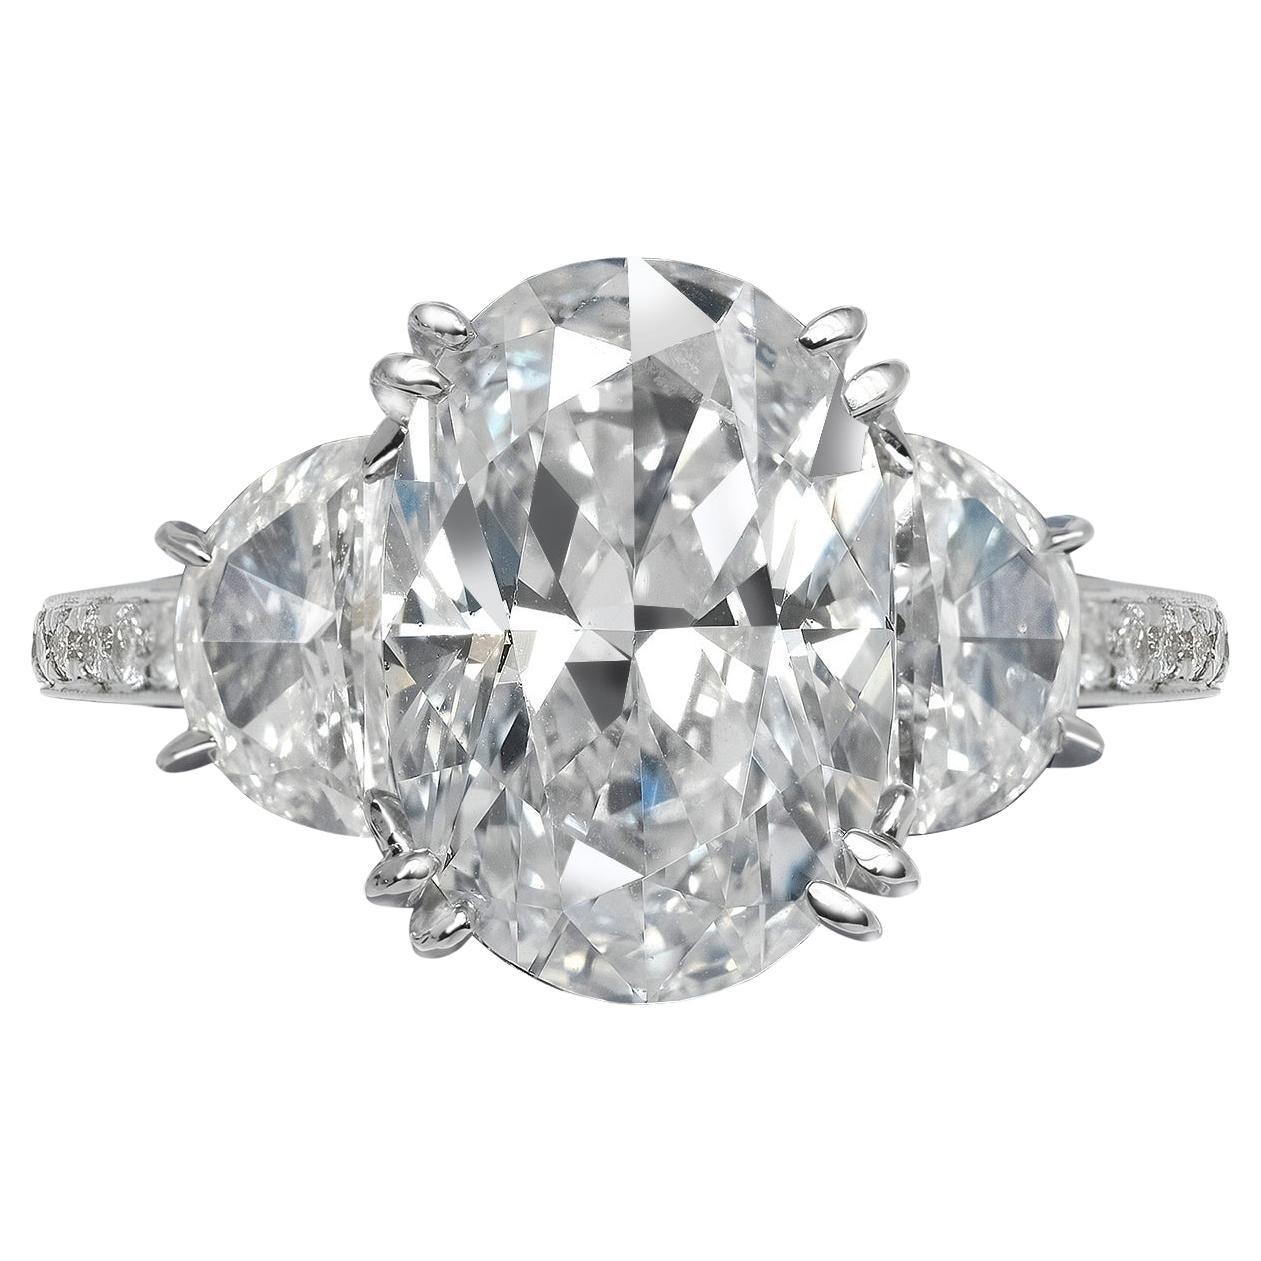 5 Carat Oval Cut Diamond Engagement Ring GIA Certified E VVS1